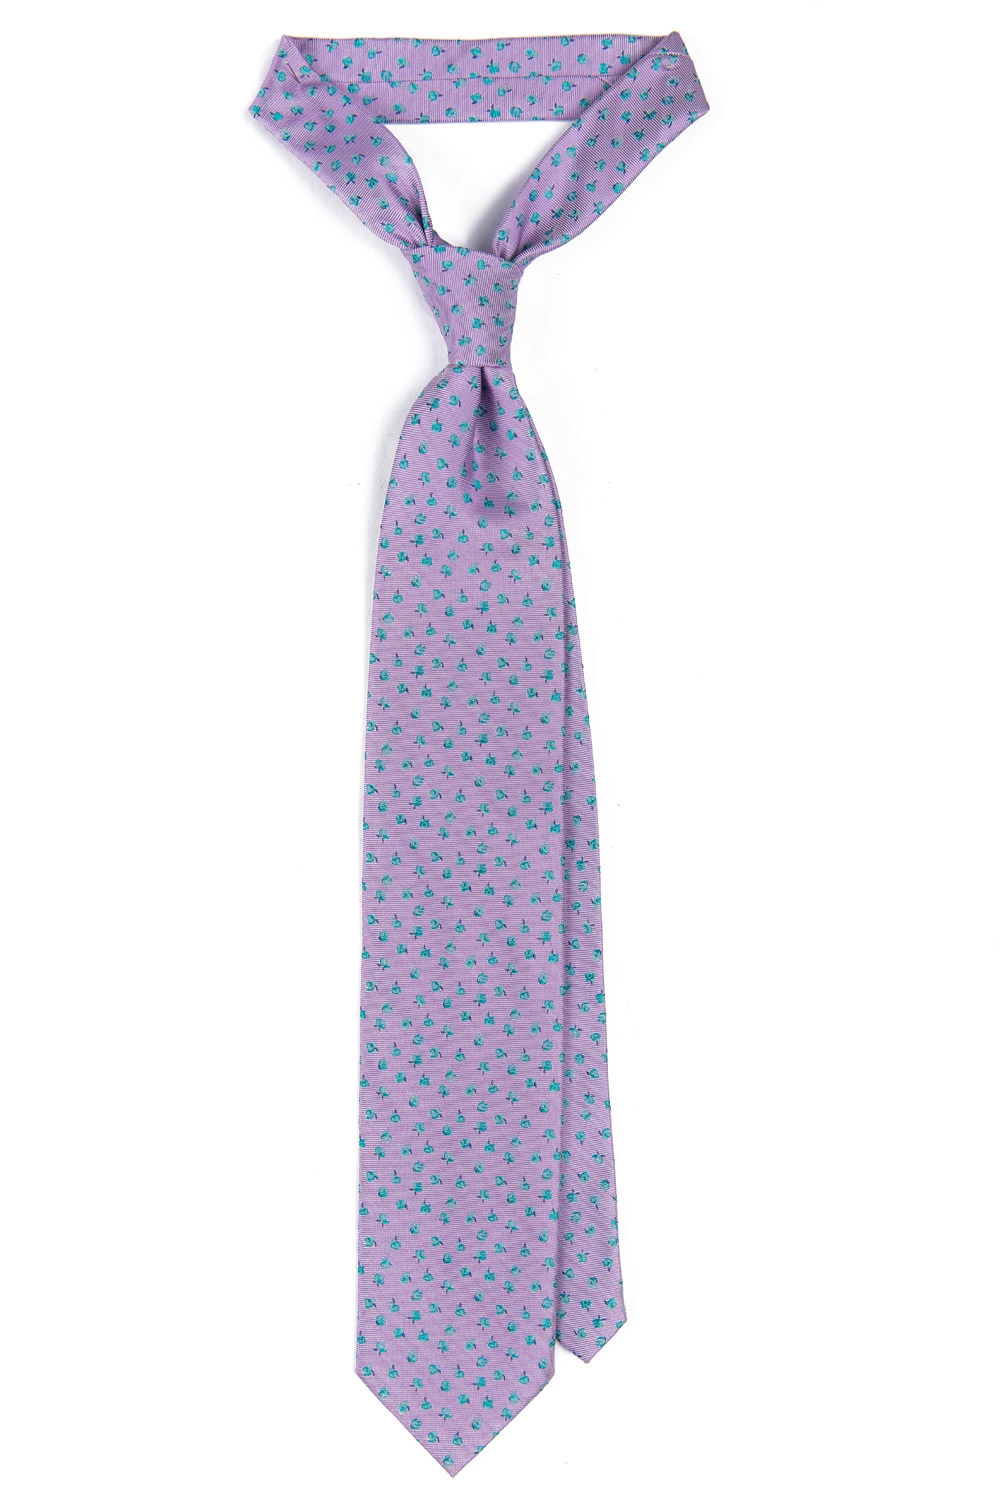 Cravata poliester lila print floral 0